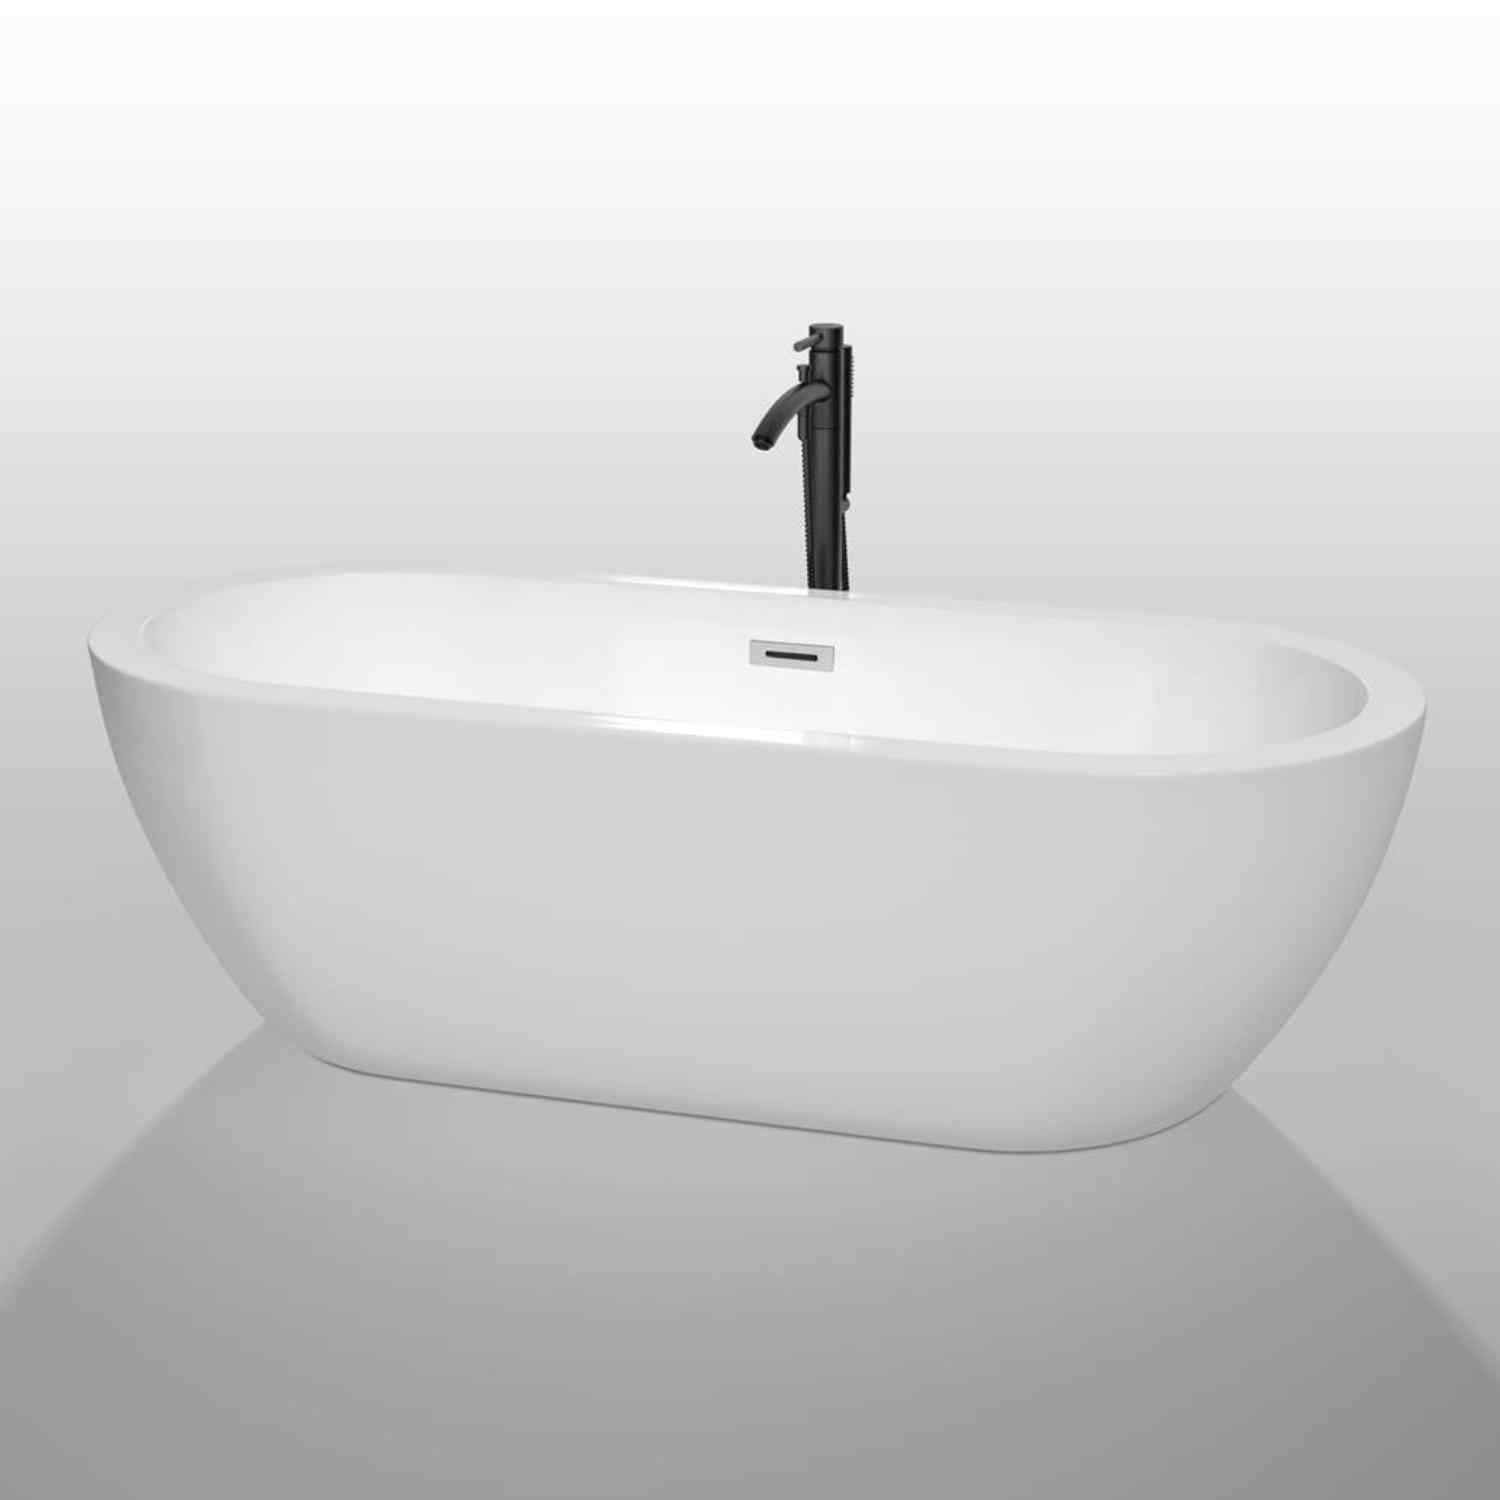 Wyndham collection Soho 72 Inch Freestanding Bathtub in White black fuchet